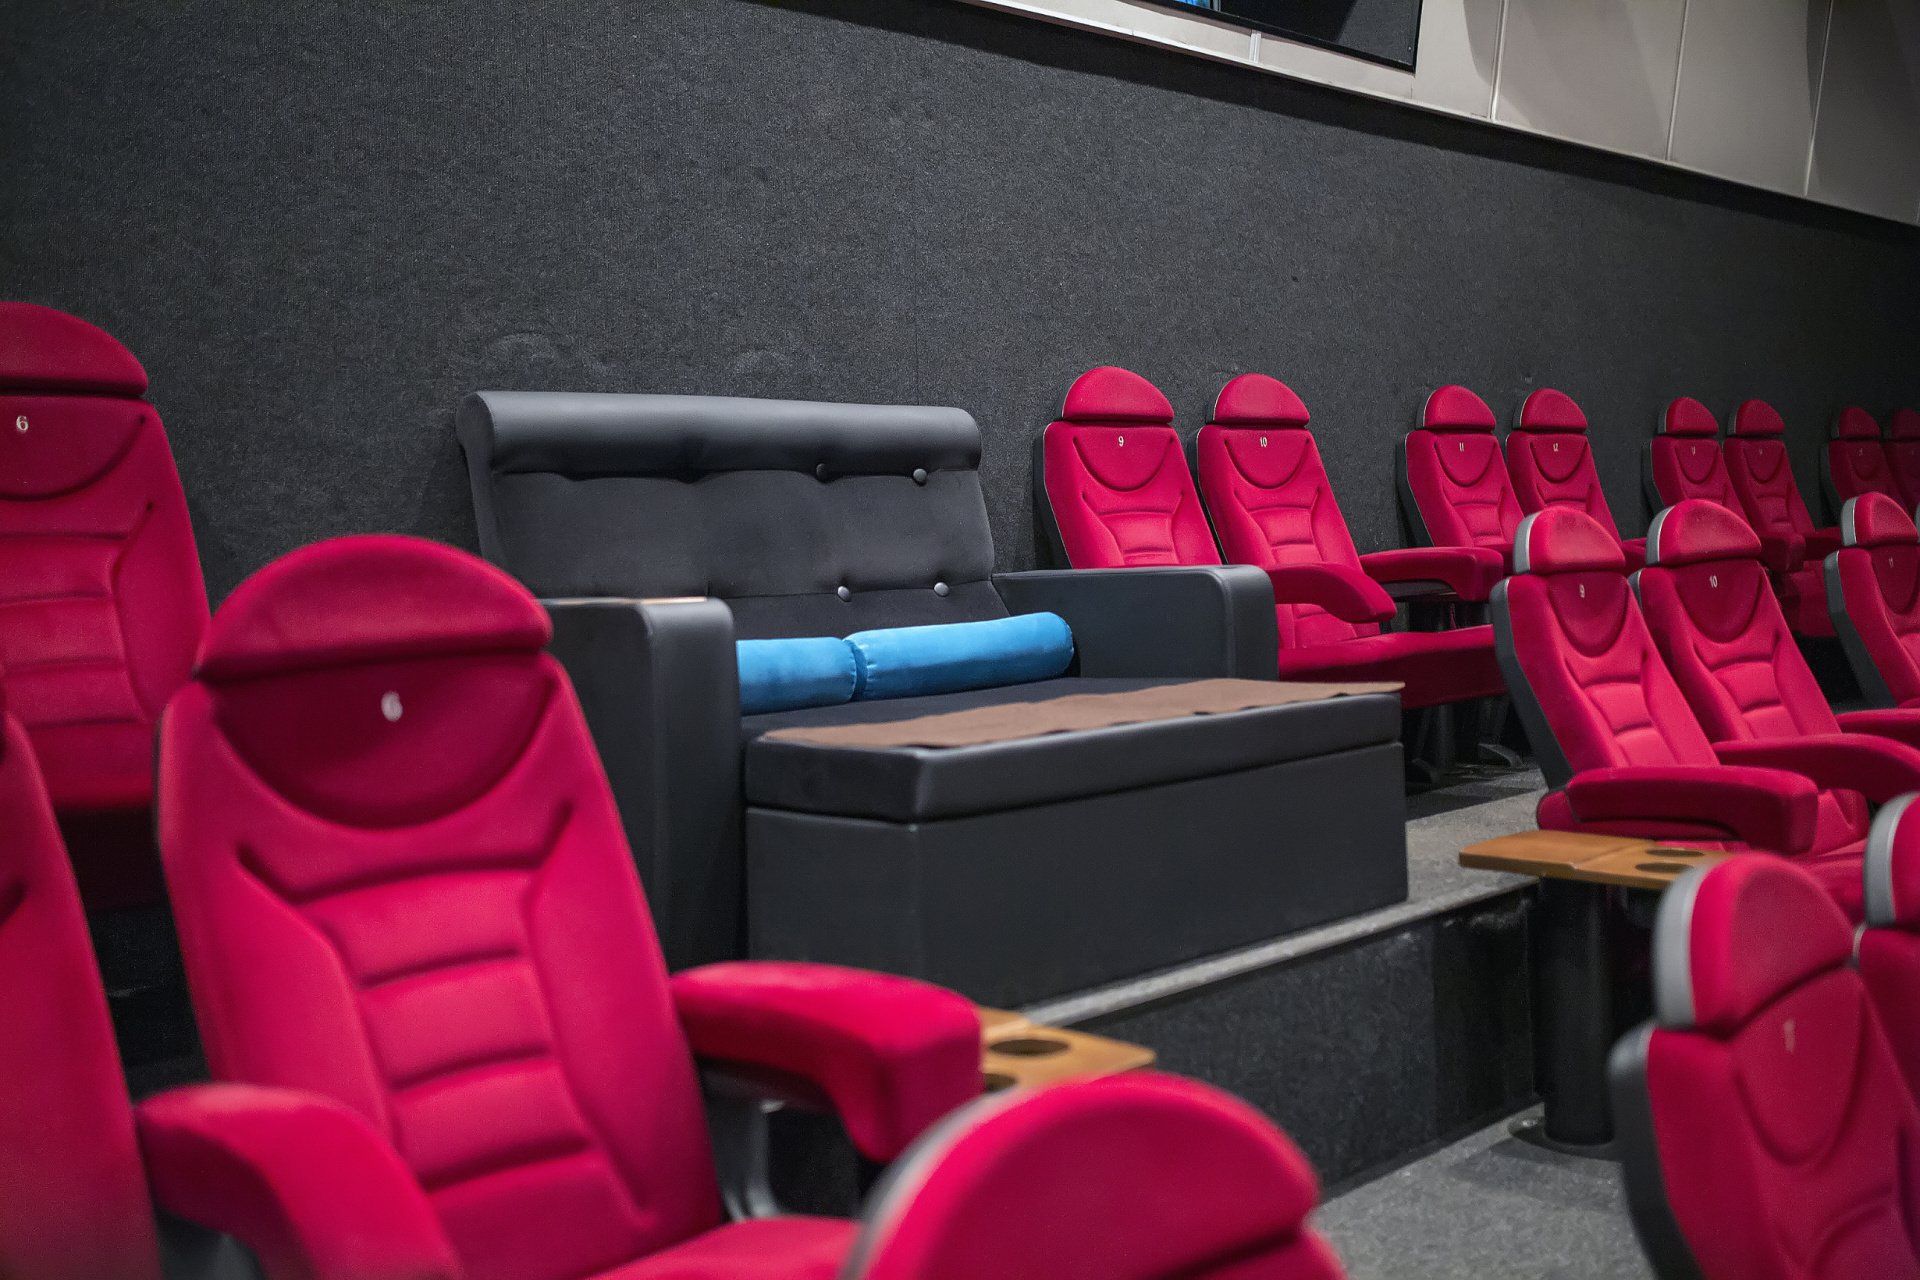 A photograph of premium seats in a cinema auditorium